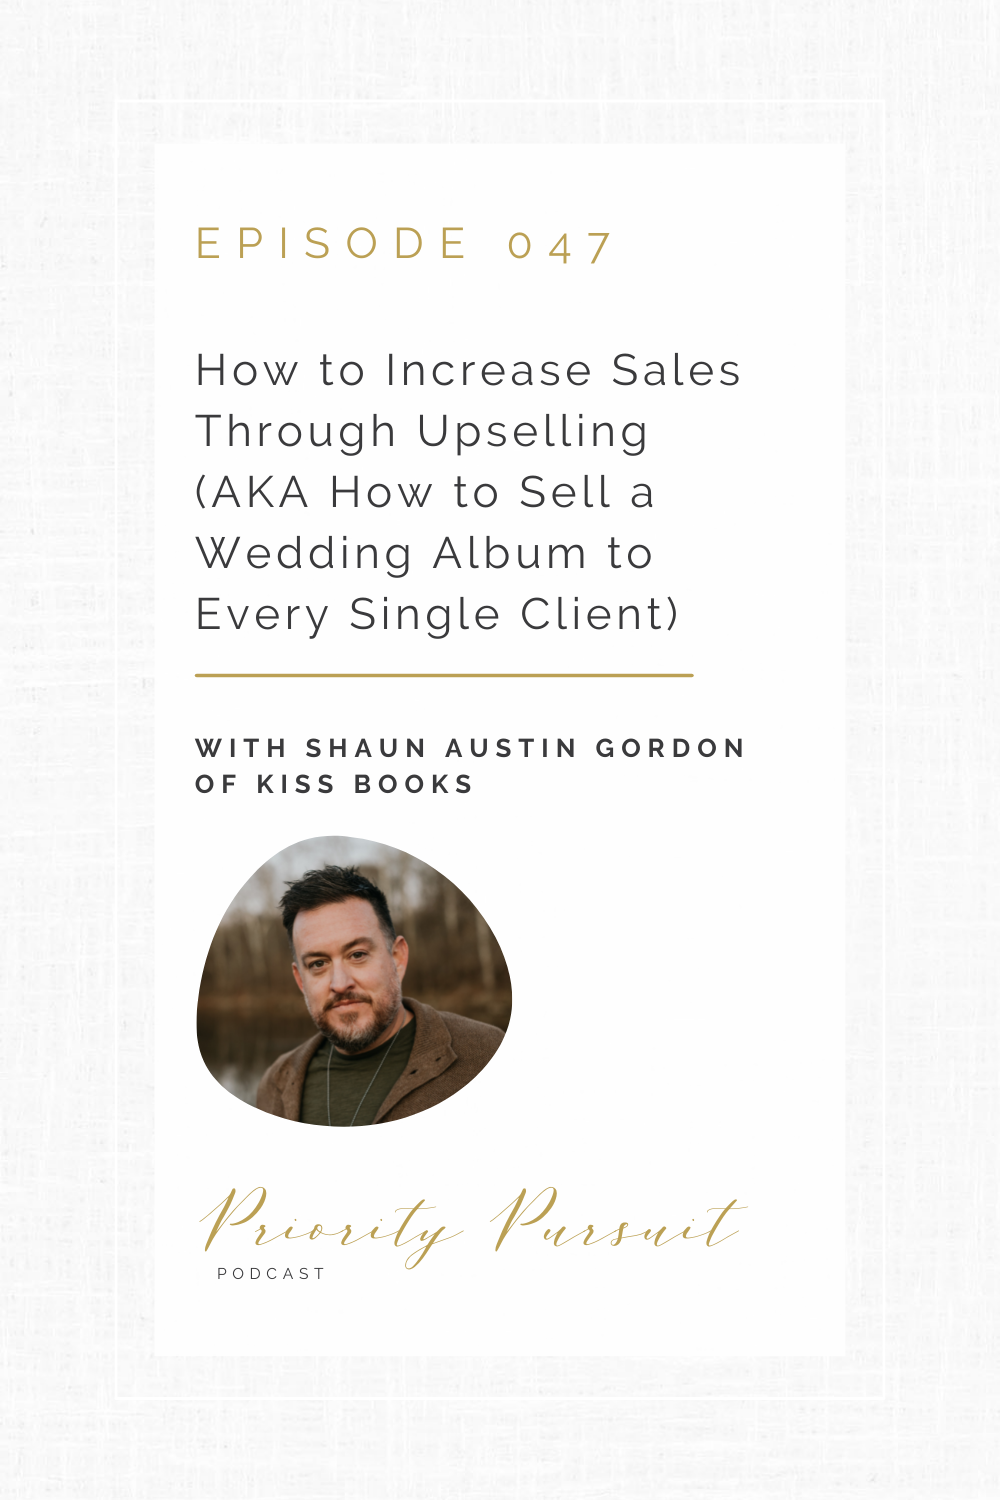 Victoria Rayburn and Shaun Austin Gordon discuss how to increase sales through upselling